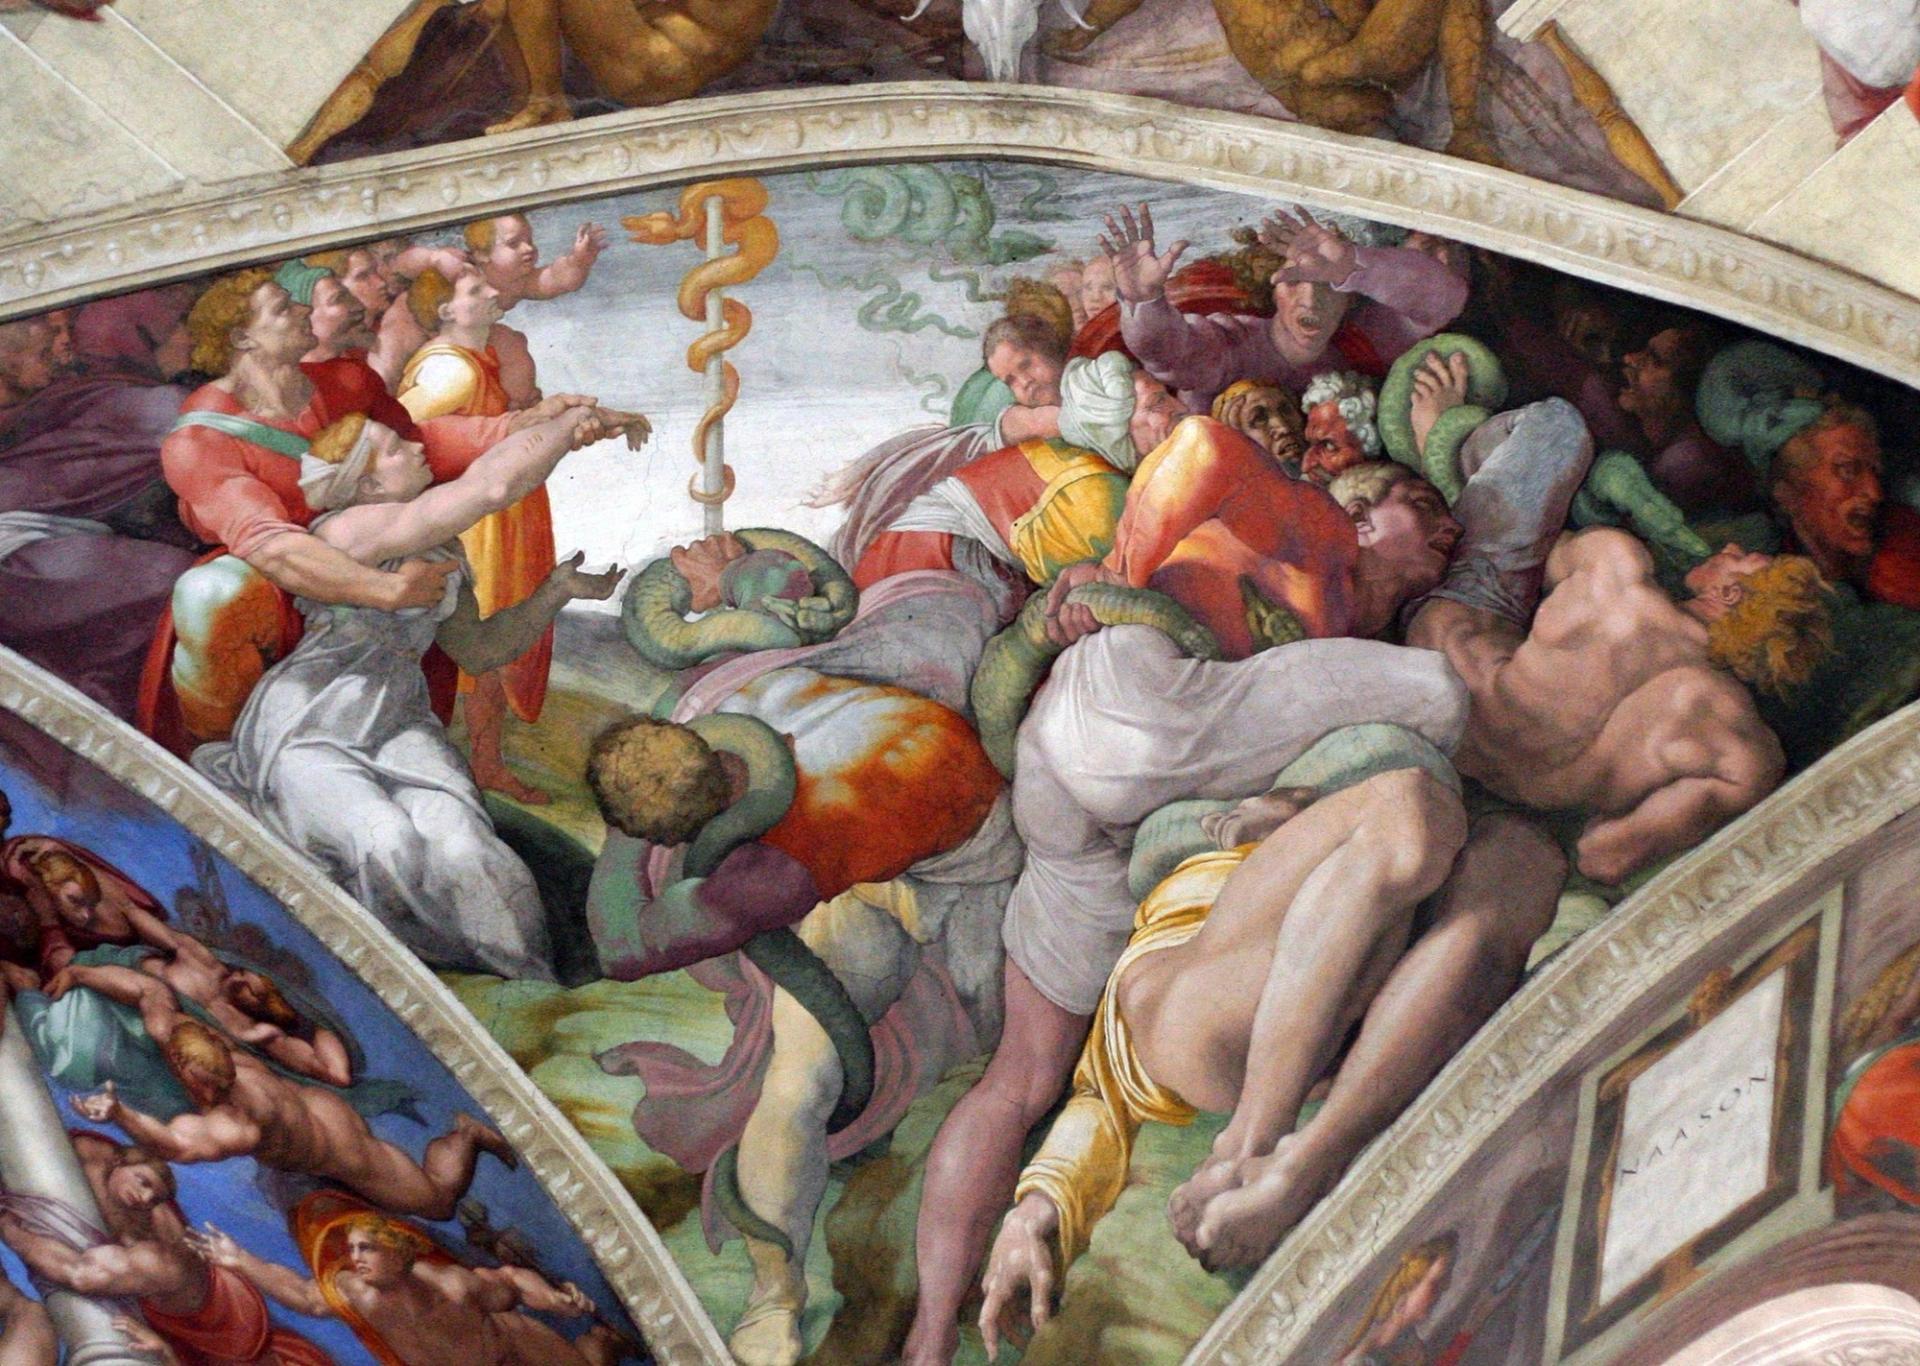 Michelangelo's Worship of the Brazen Serpent (1511) painted on the ceilings of the Sistine Chapel

Photo: Nyárlőrinczi Viktória via Wikimedia